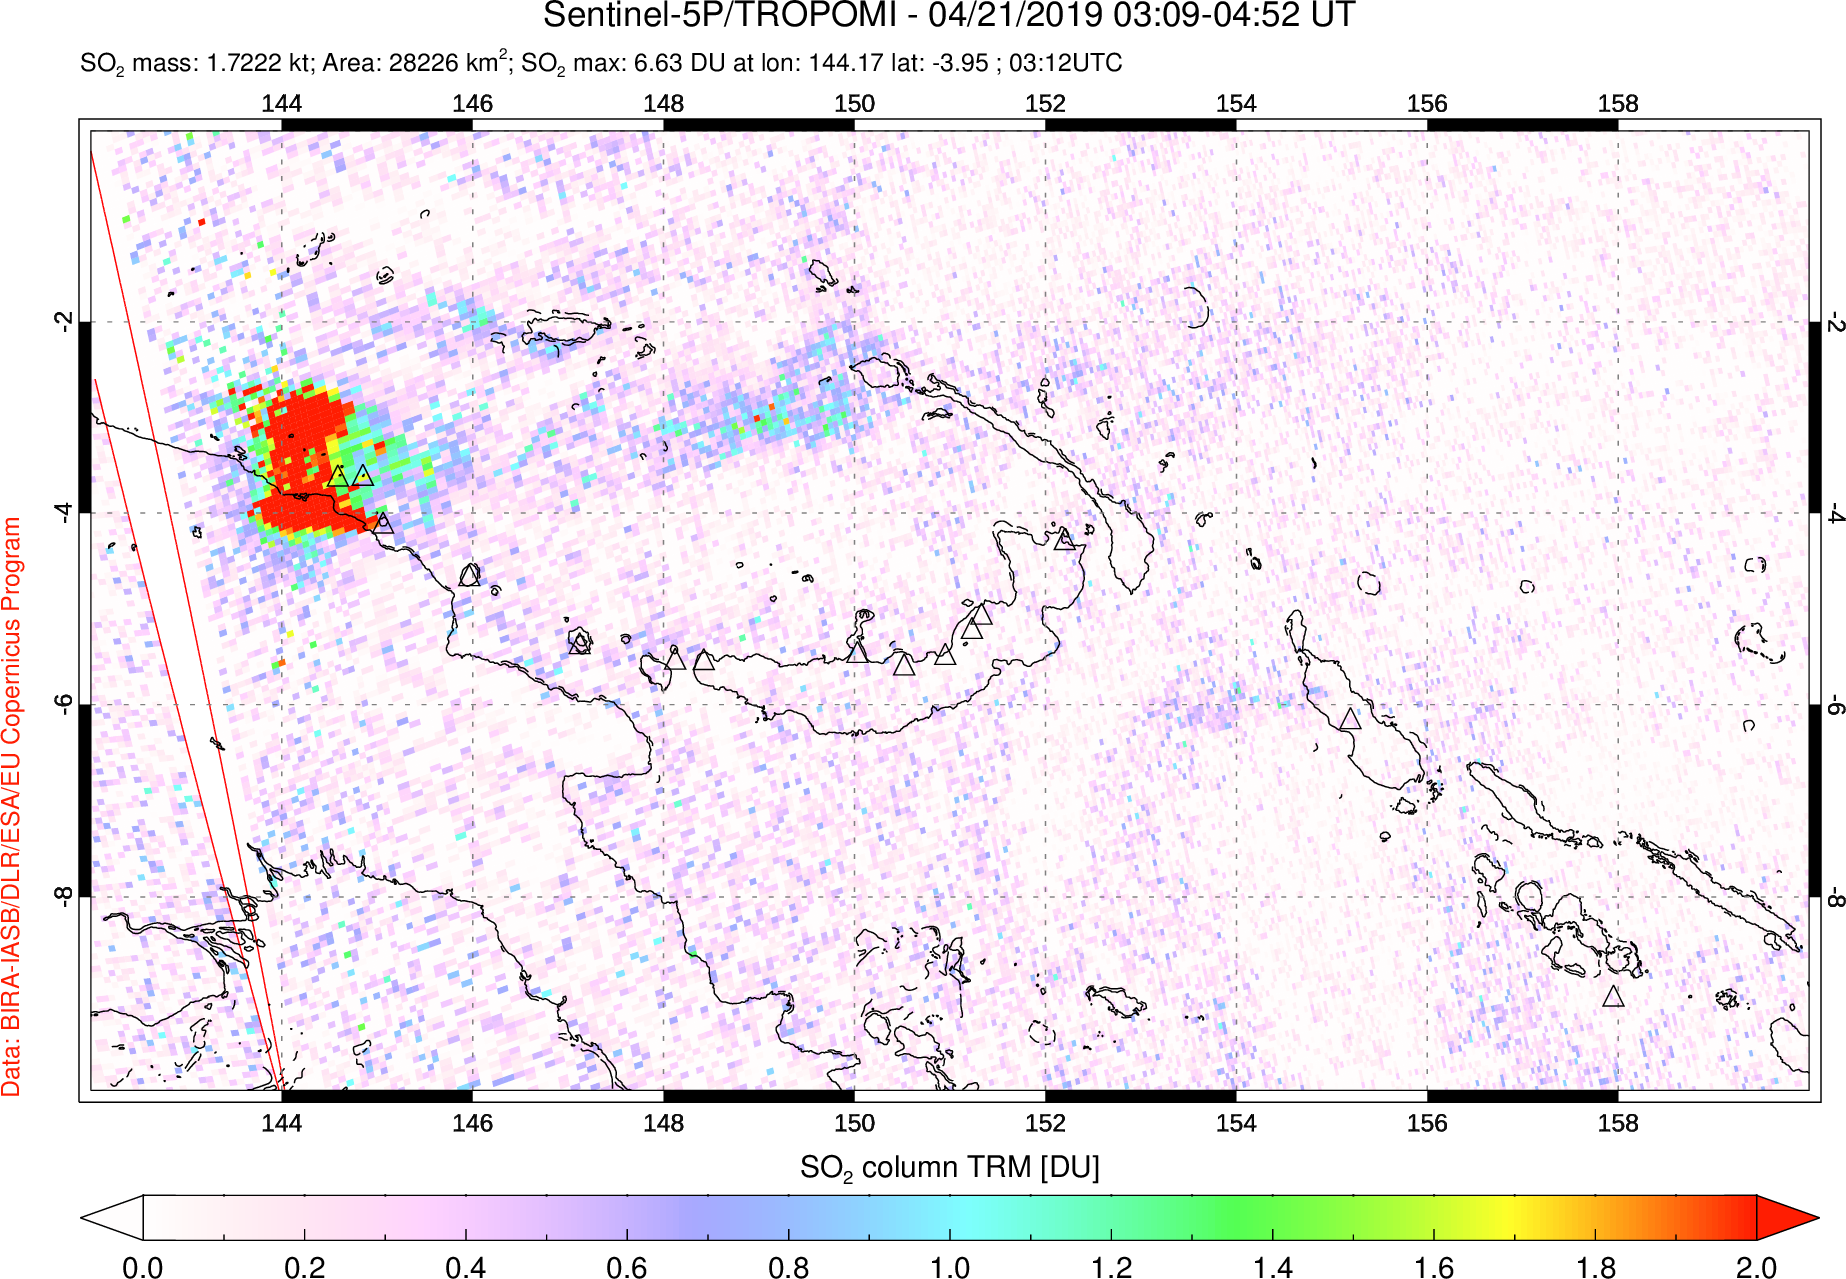 A sulfur dioxide image over Papua, New Guinea on Apr 21, 2019.